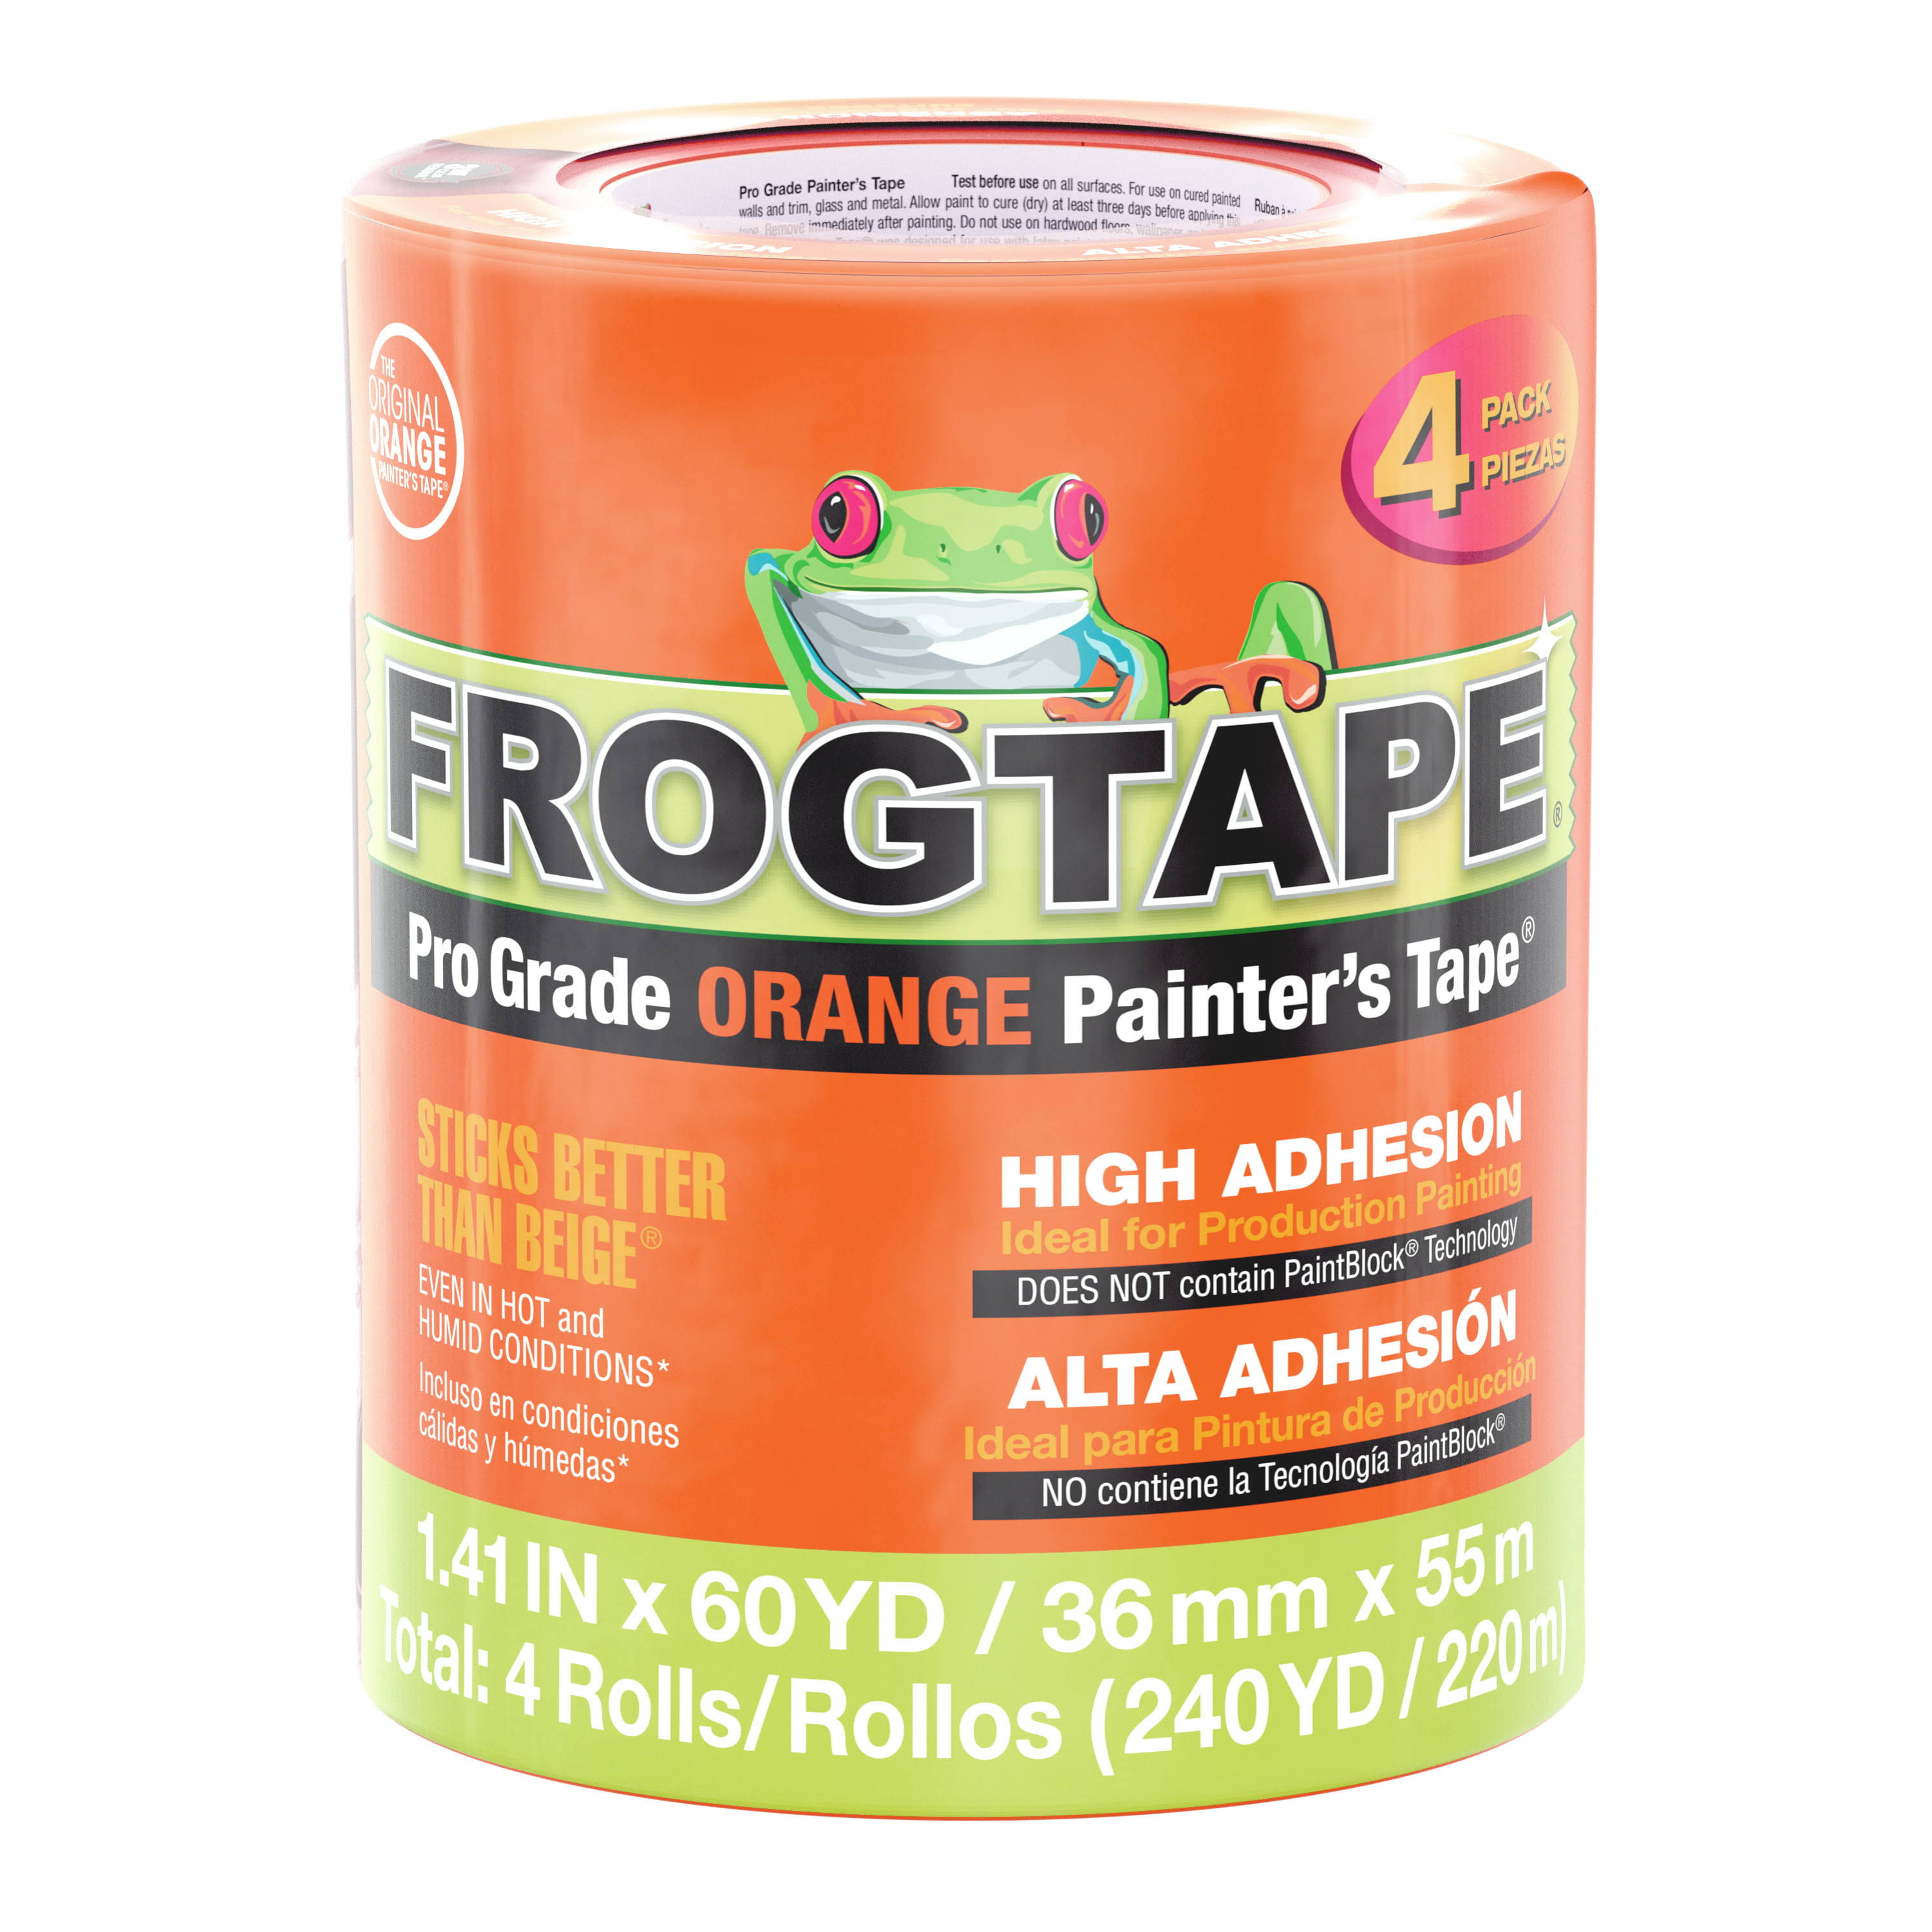 FROGTAPE Pro Grade Orange Painter's Tape, 1.41 Inx60 Yd, 4 Rolls Per Pack, 242808